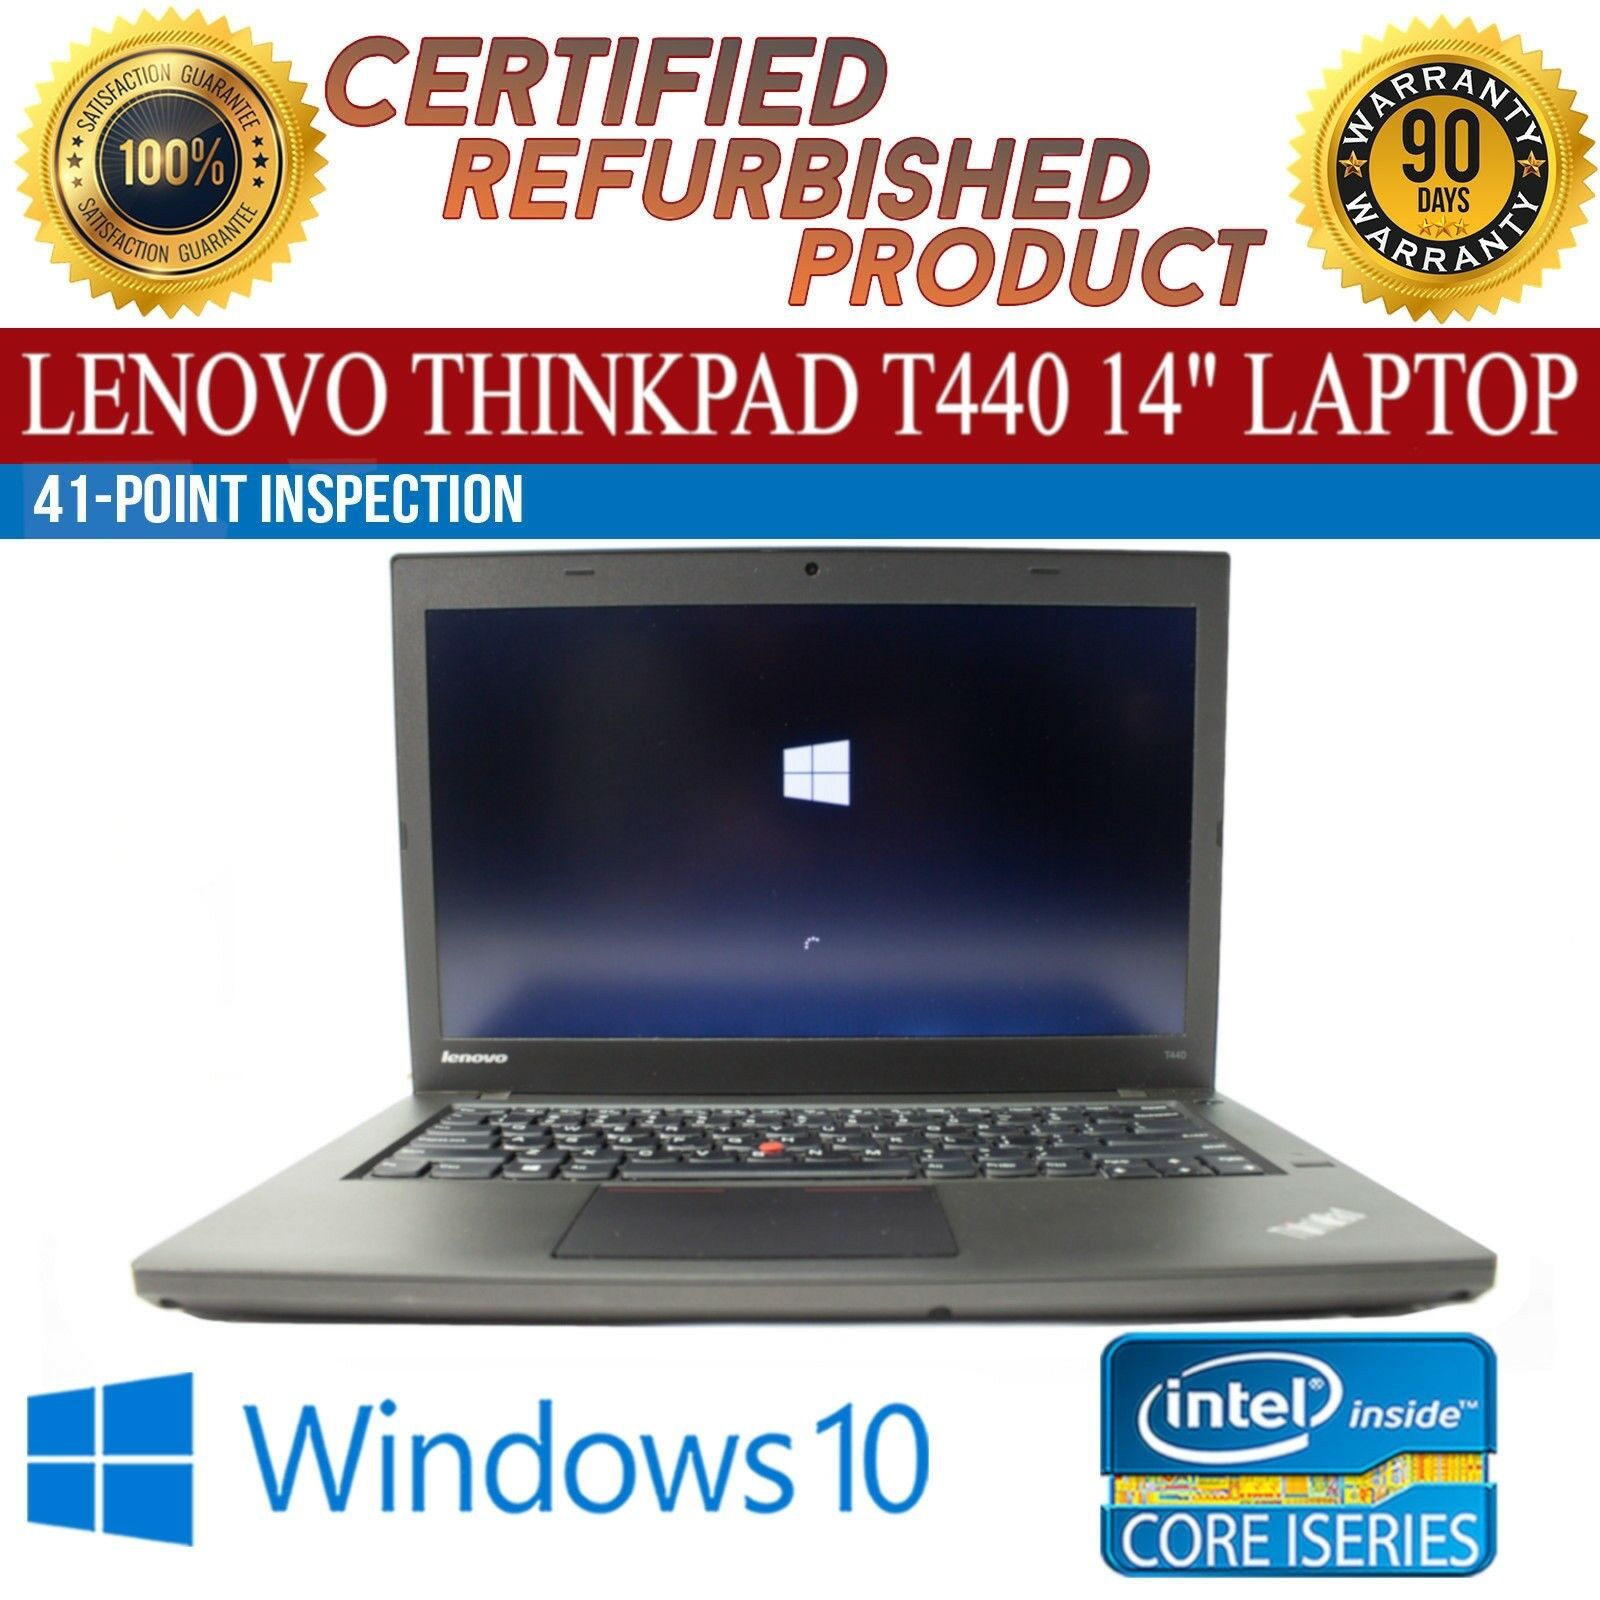 Lenovo ThinkPad T440 14” i5 8GB 500gb hdd windows 10